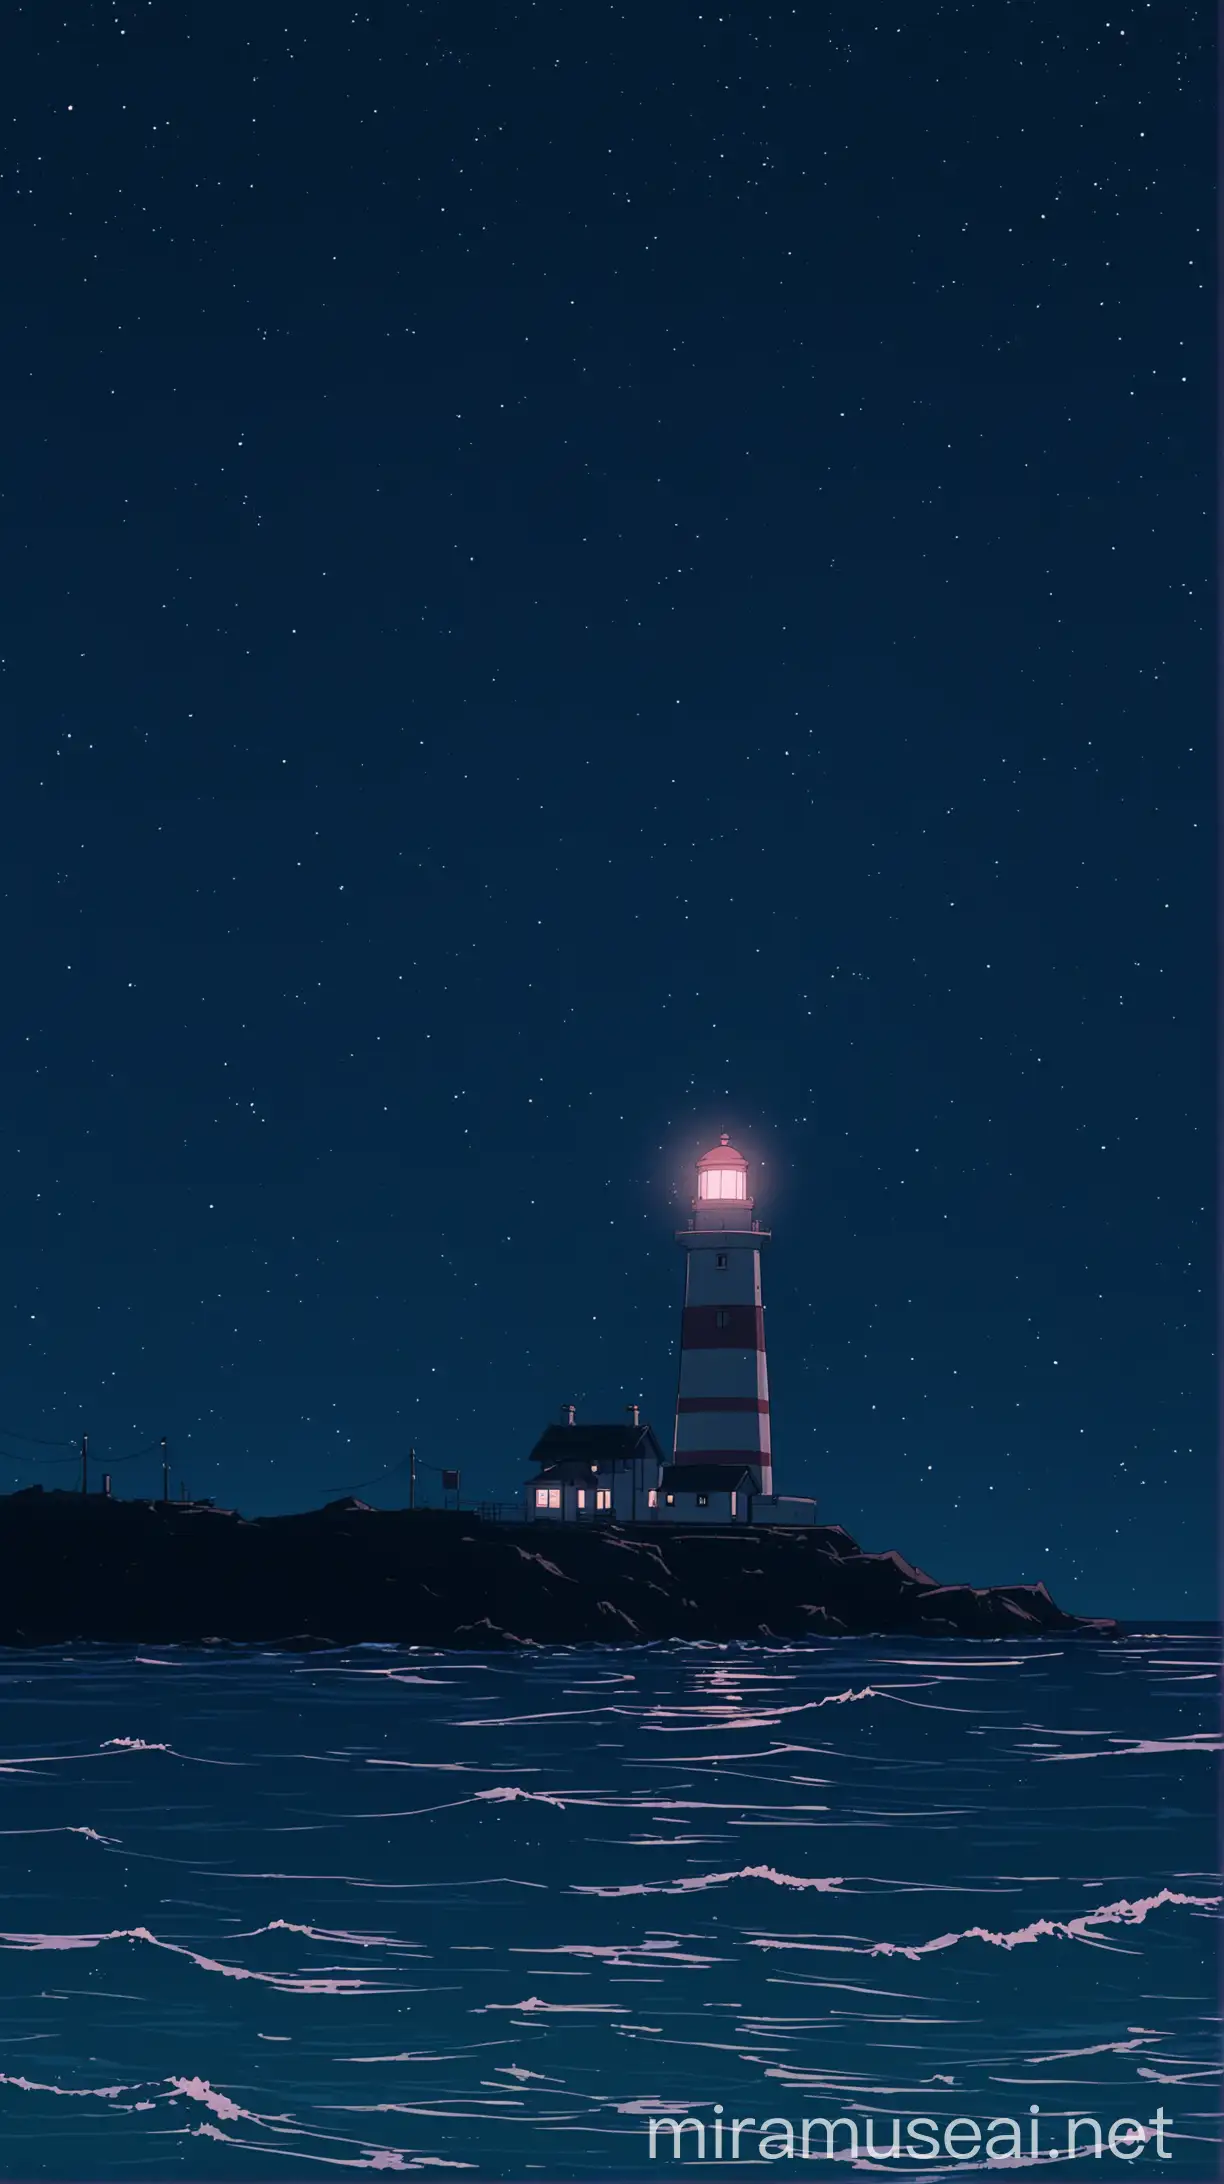 Charming Anime Aesthetic Midnight Lighthouse by the Ocean in LoFi Style